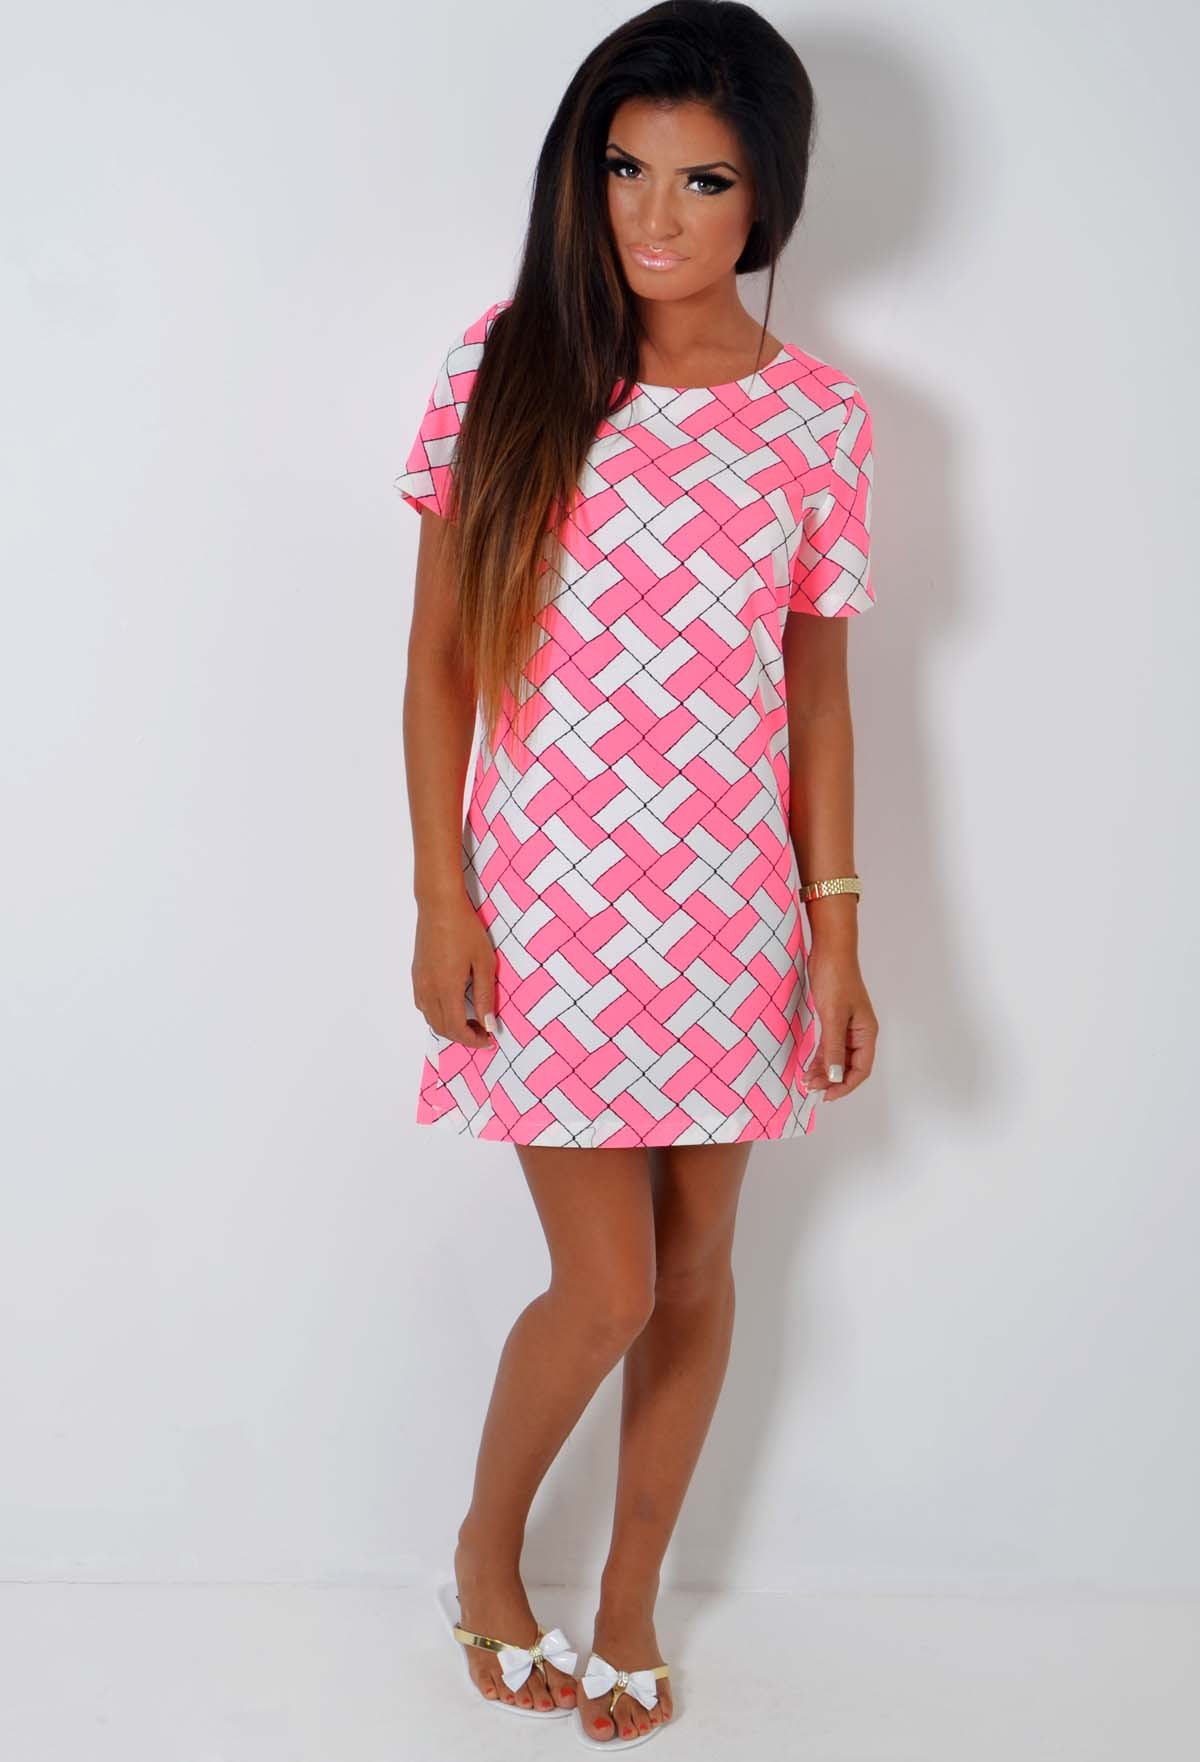 Ingot-Neon-Pink-and-Grey-Block-Print-Tunic-Dresses